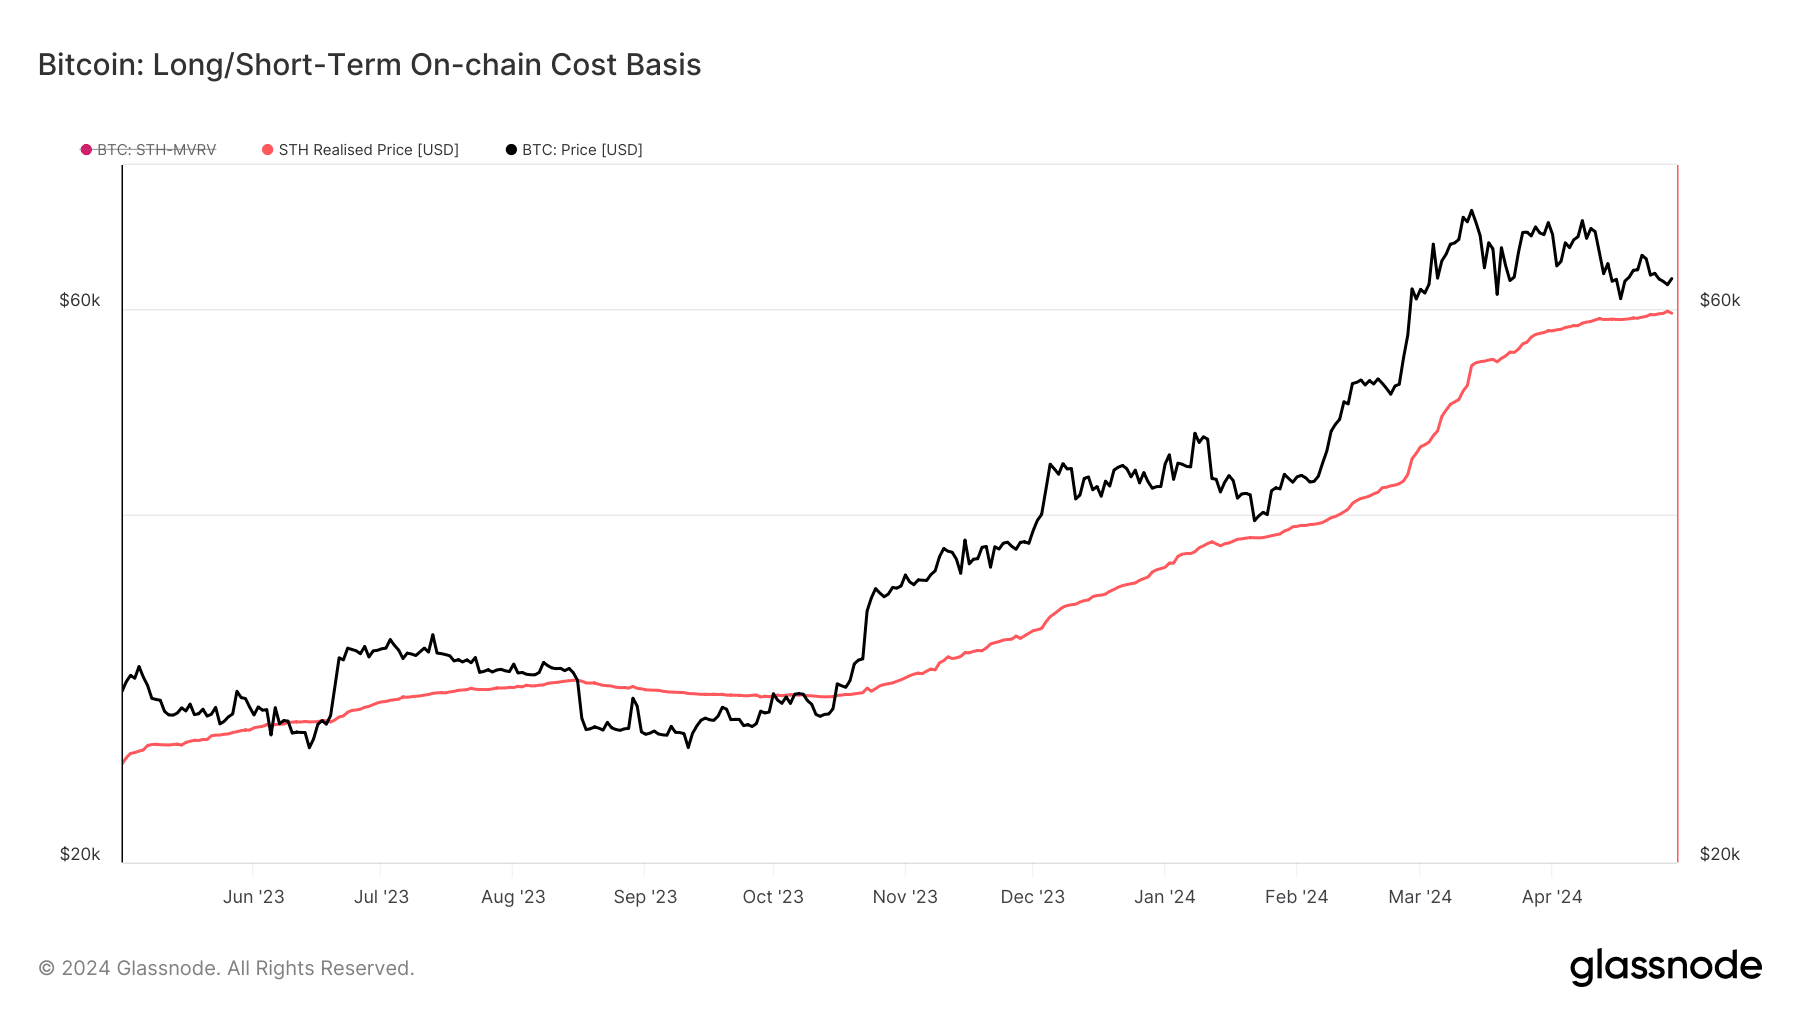 Bitcoin on-chain cost basis